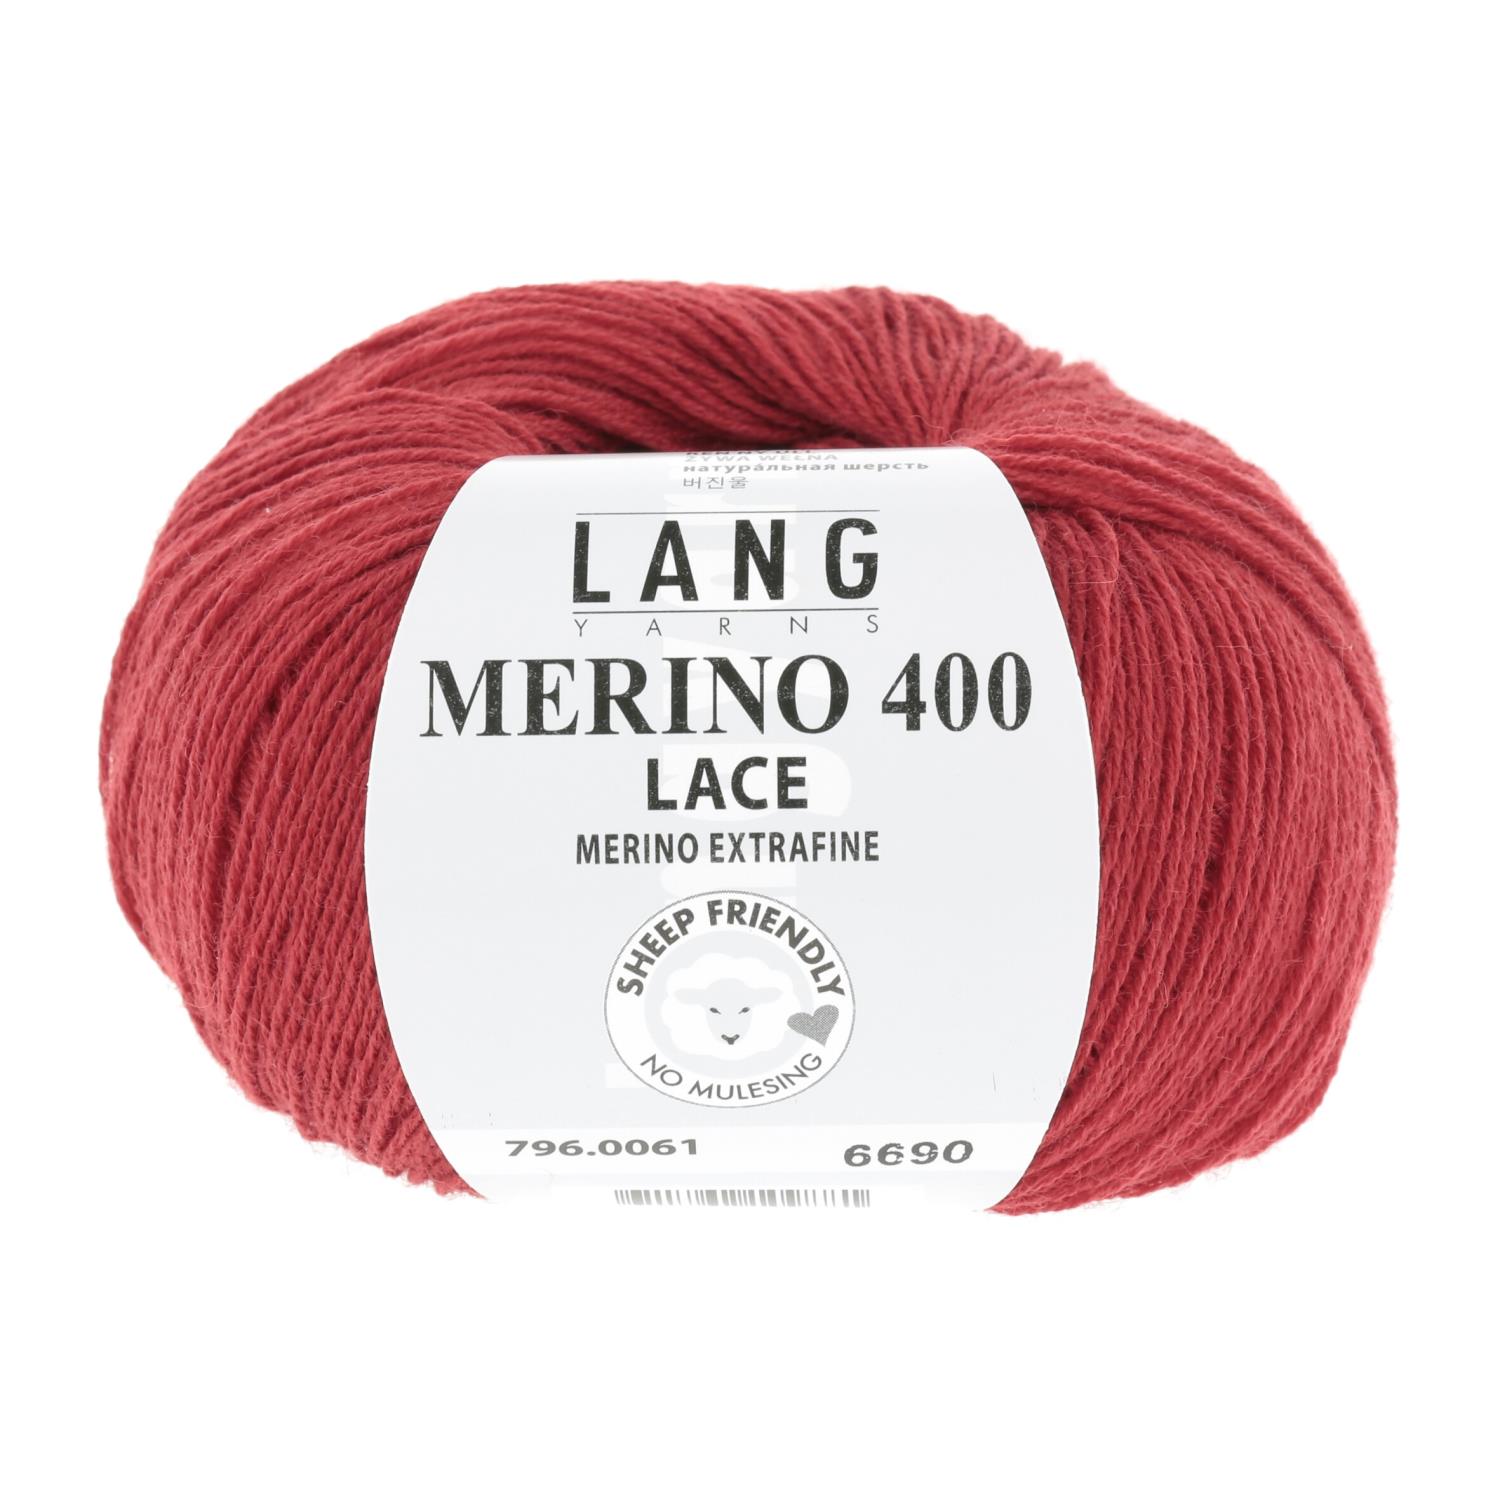 61 Merino 400 lace - red